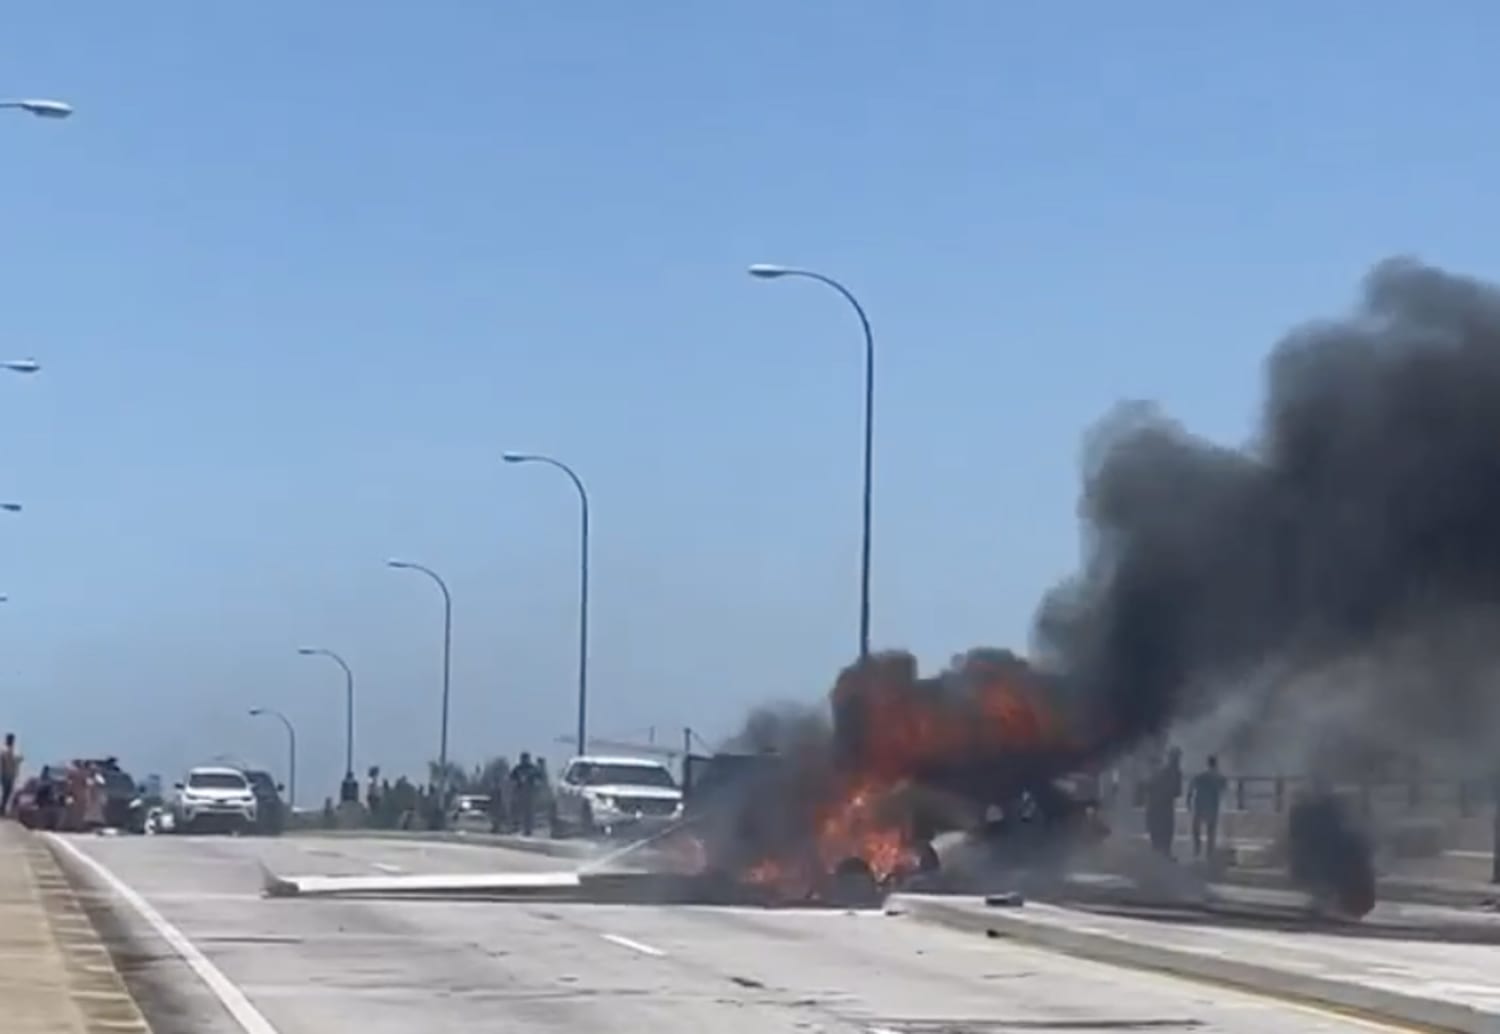 Small plane bursts into flames after crashing into Miami bridge